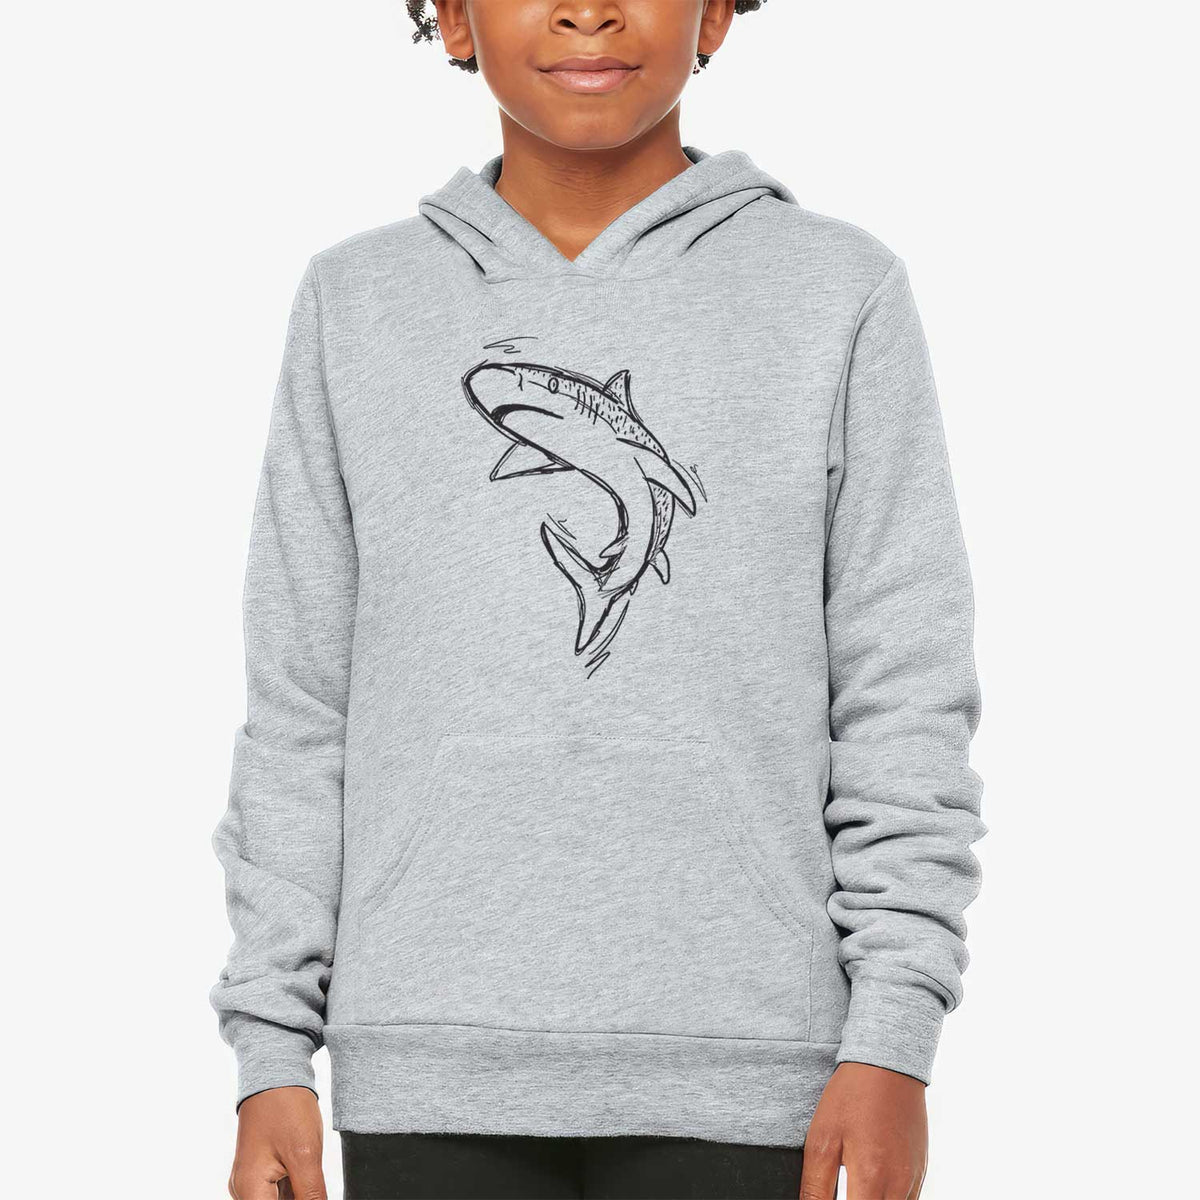 Tiger Shark - Youth Hoodie Sweatshirt